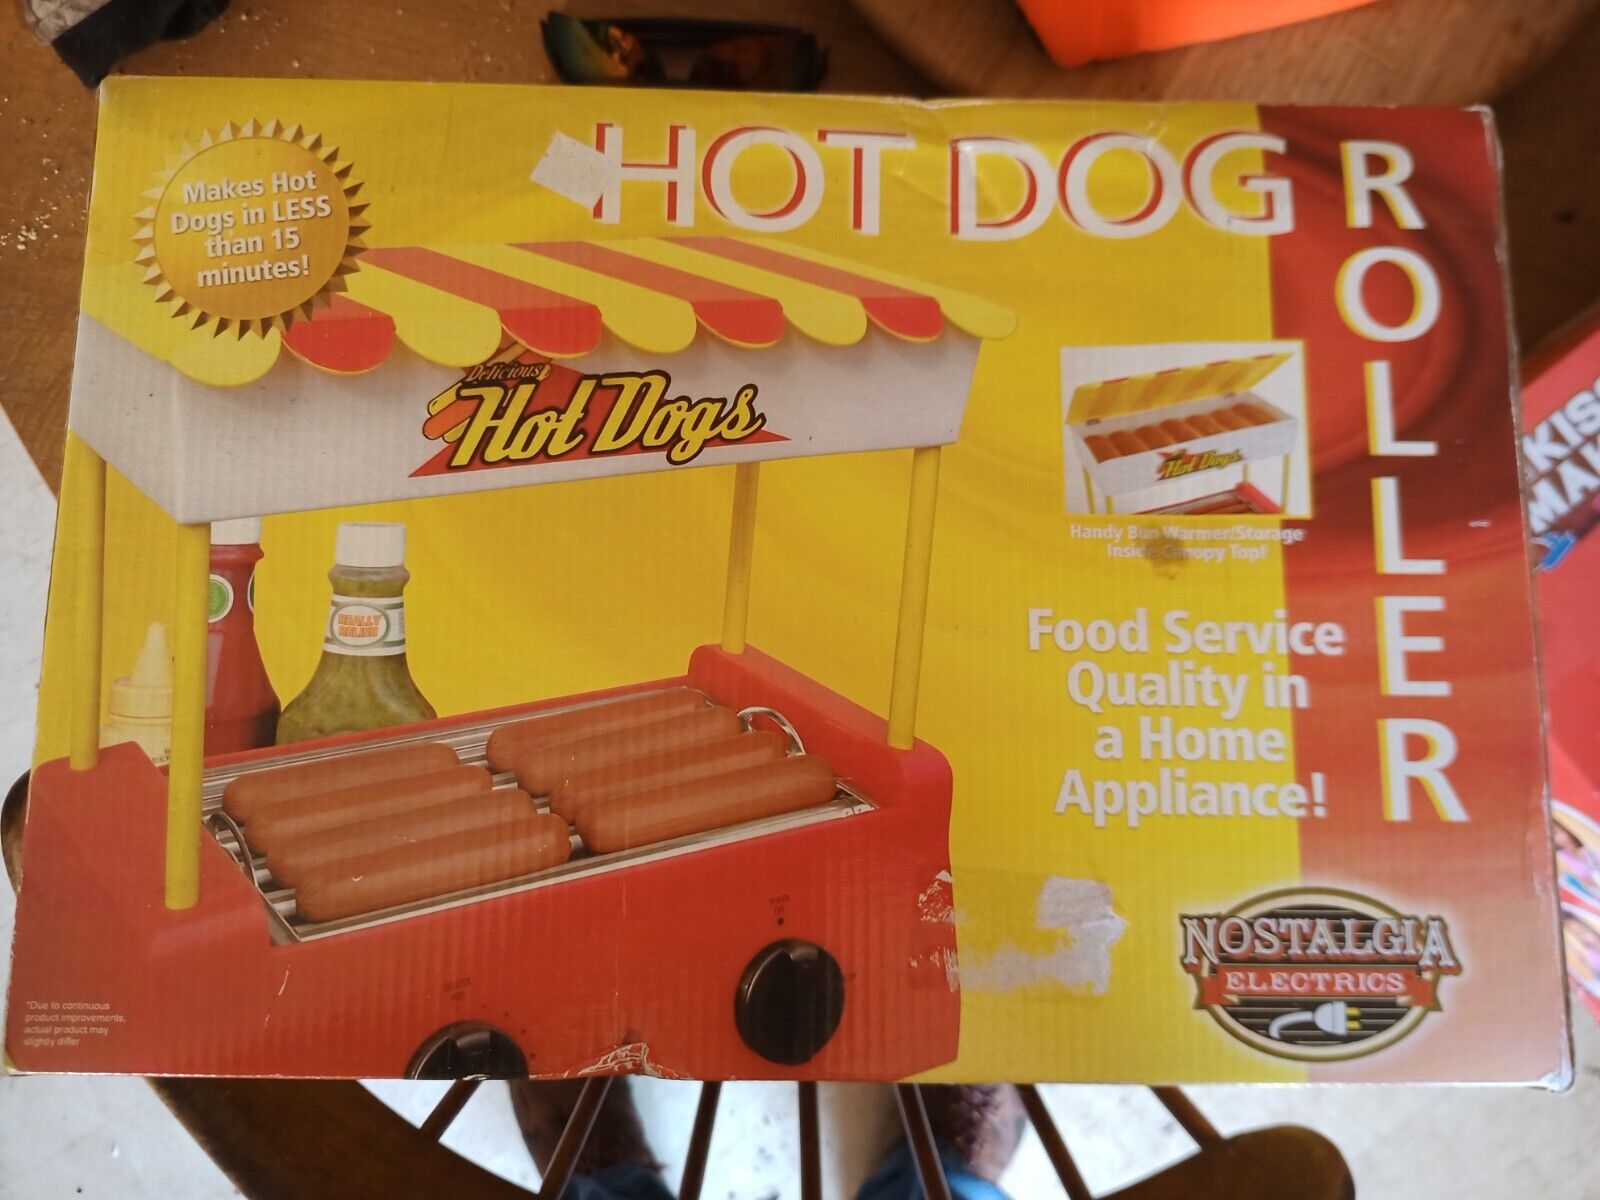 NIB NEW Nostalgia Electrics HDG598 Hot Dog ROLLER w/ Bun Warmer CUTE CART L@@K